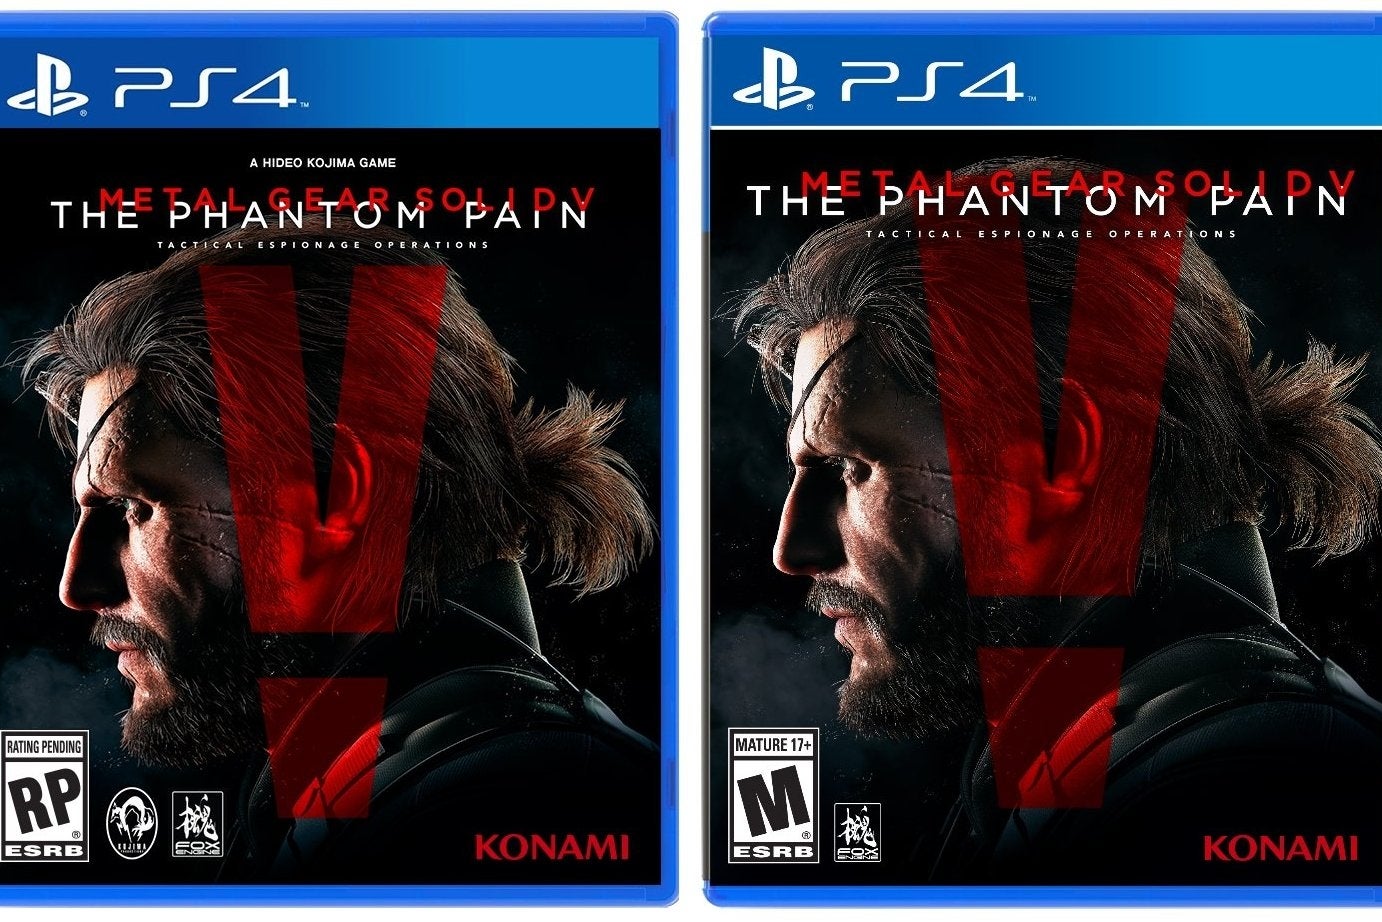 Image for Konami scrubs Kojima's name from Metal Gear Solid 5: The Phantom Pain cover